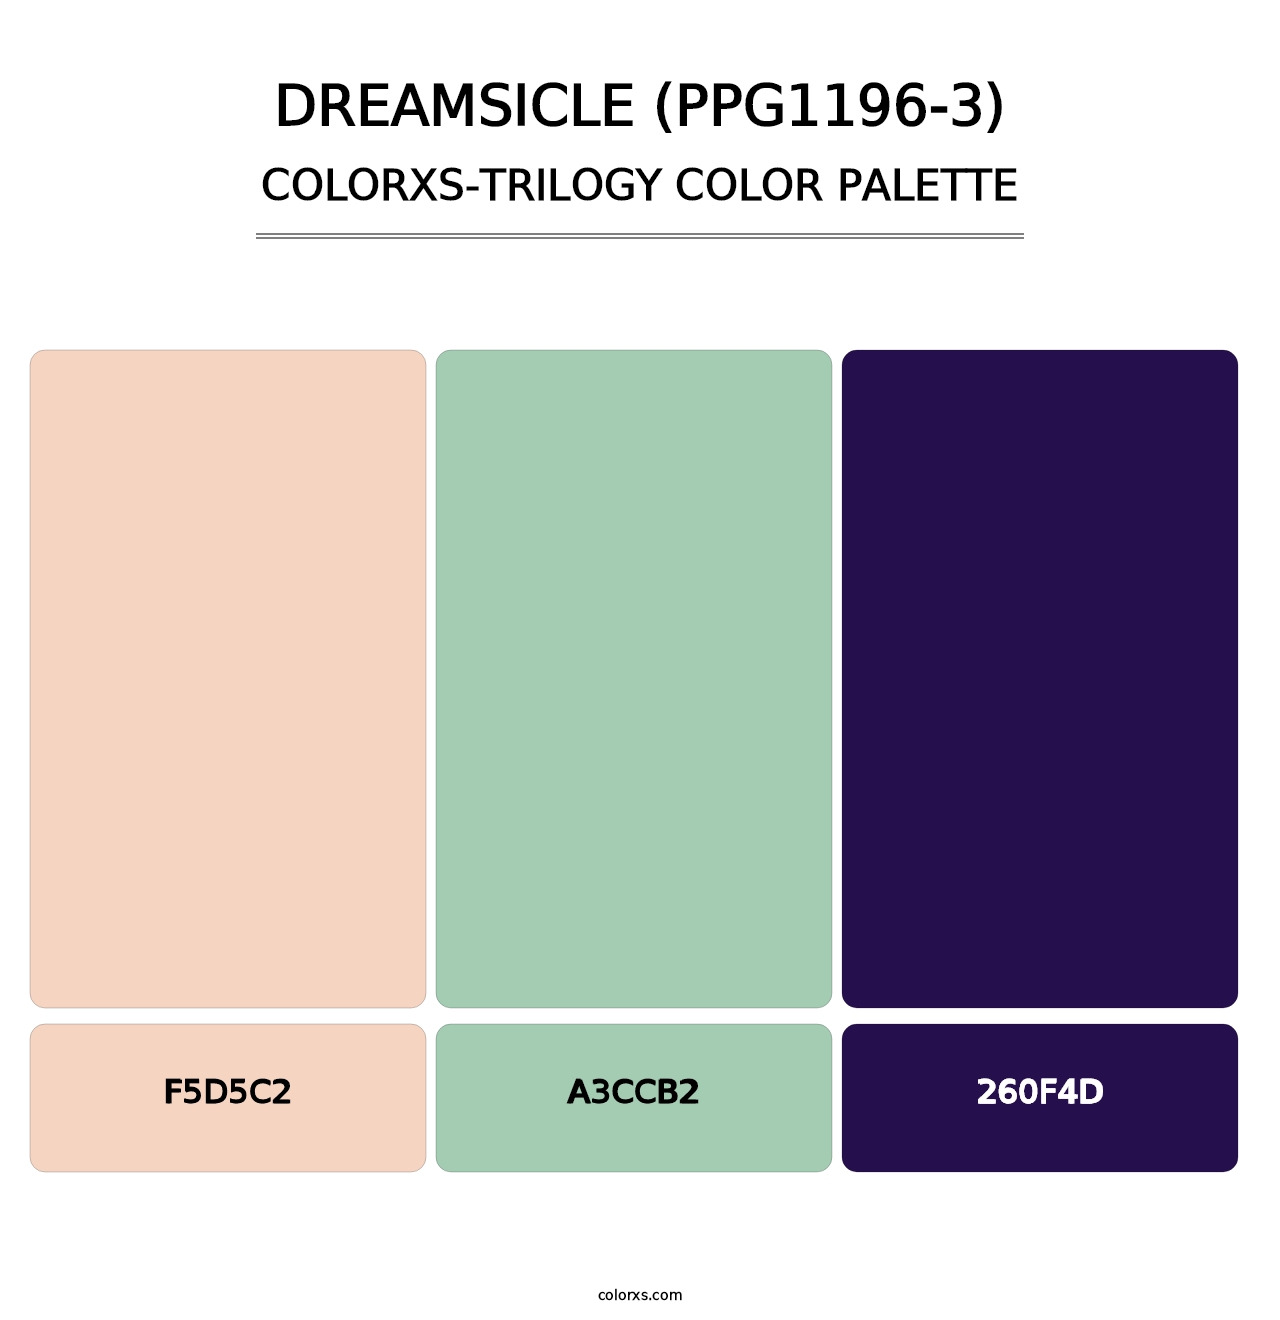 Dreamsicle (PPG1196-3) - Colorxs Trilogy Palette